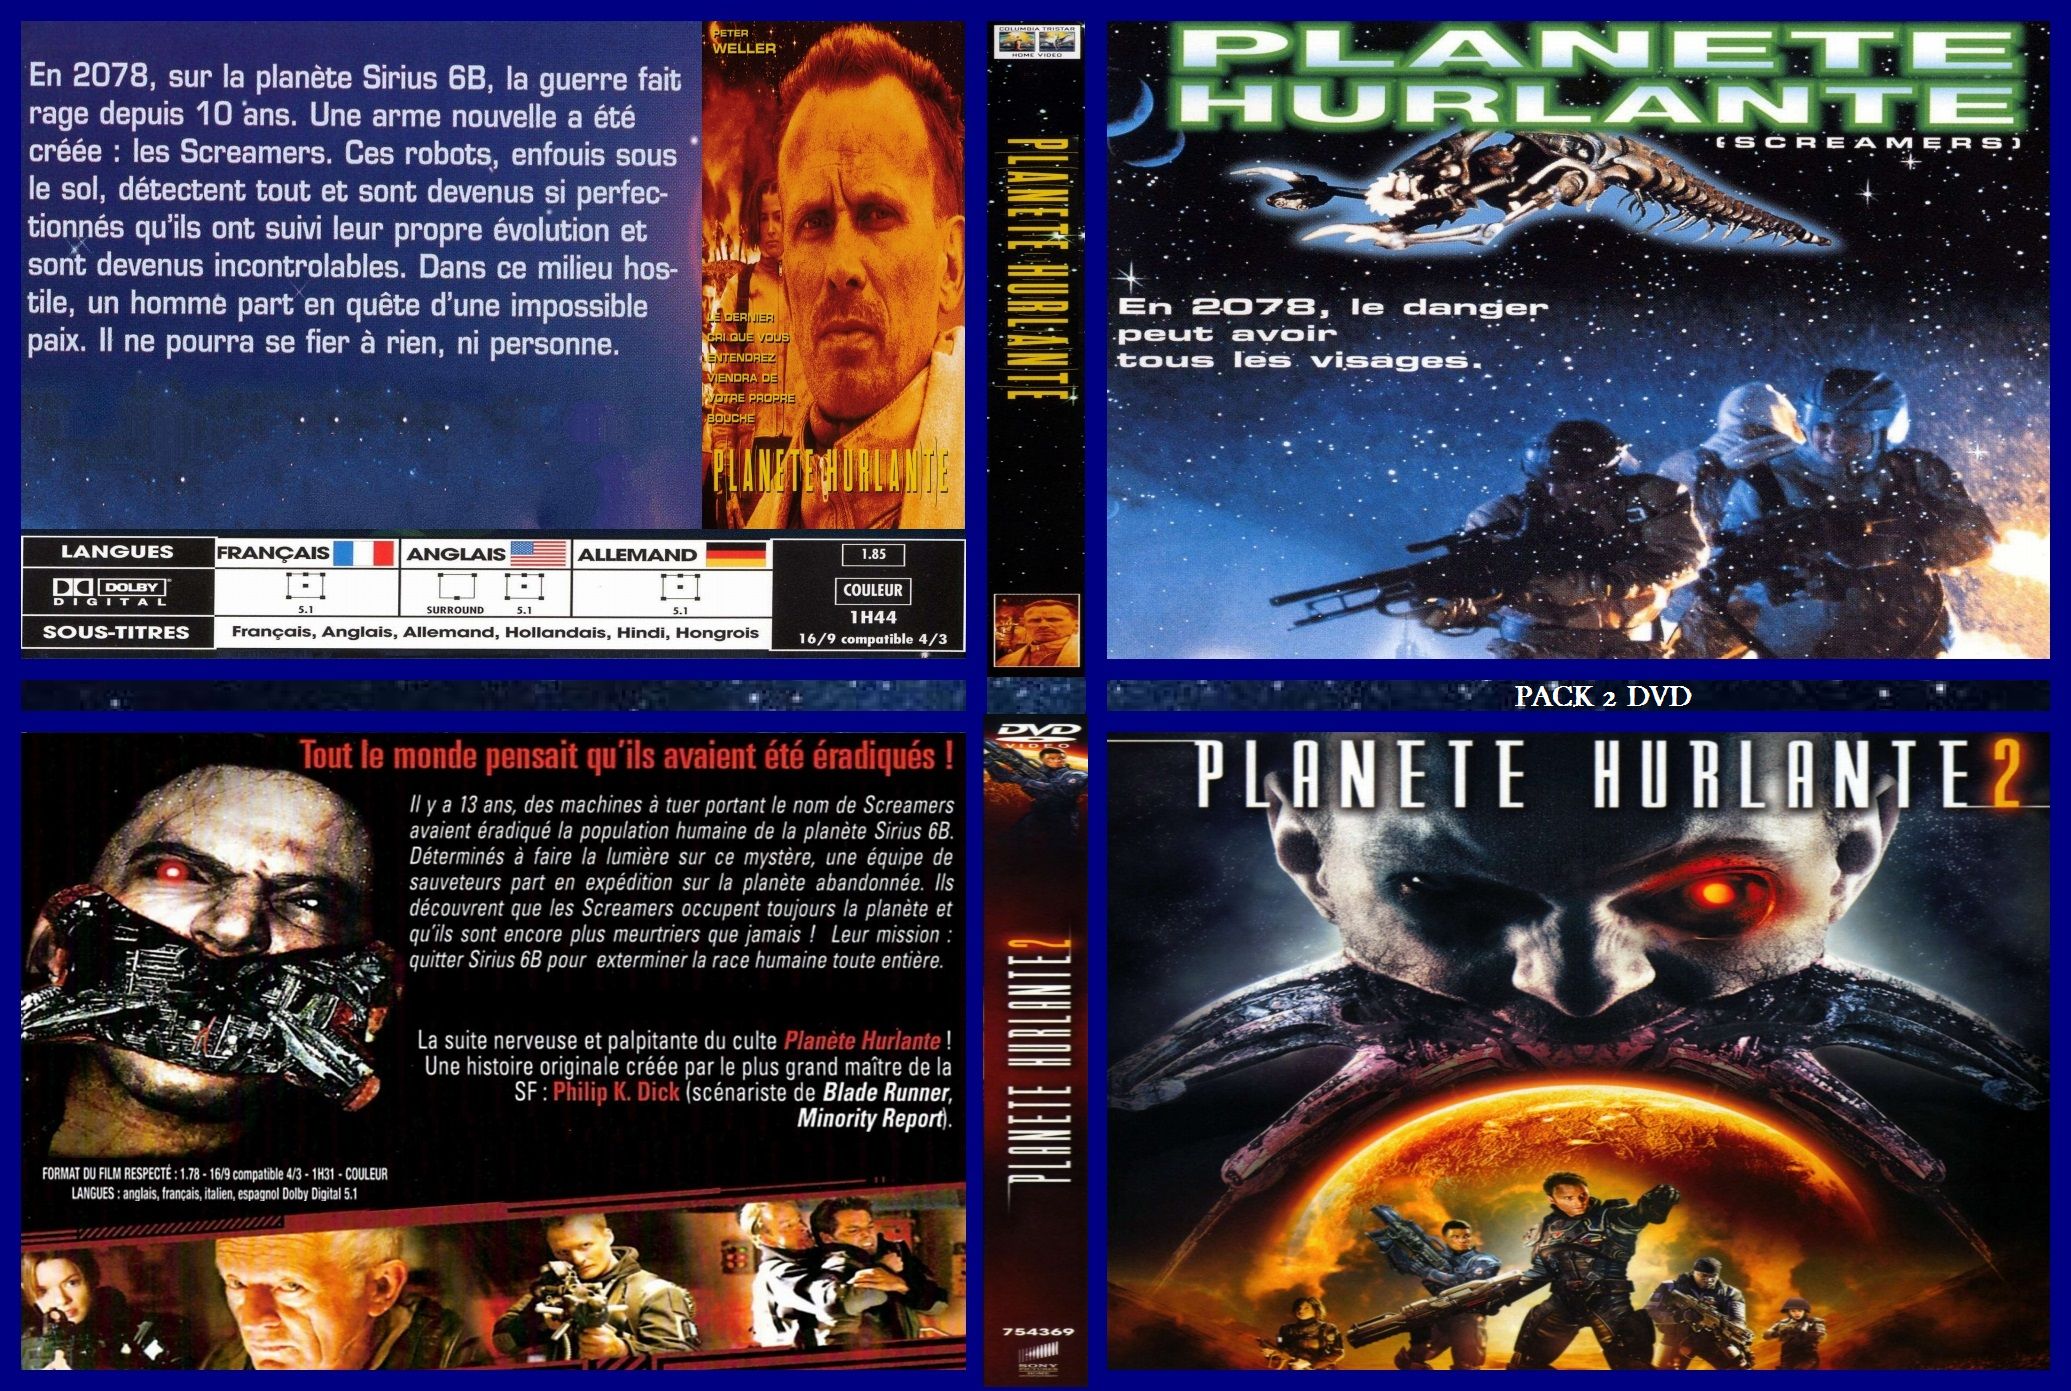 Jaquette DVD Planete Hurlante 1 & 2 custom 